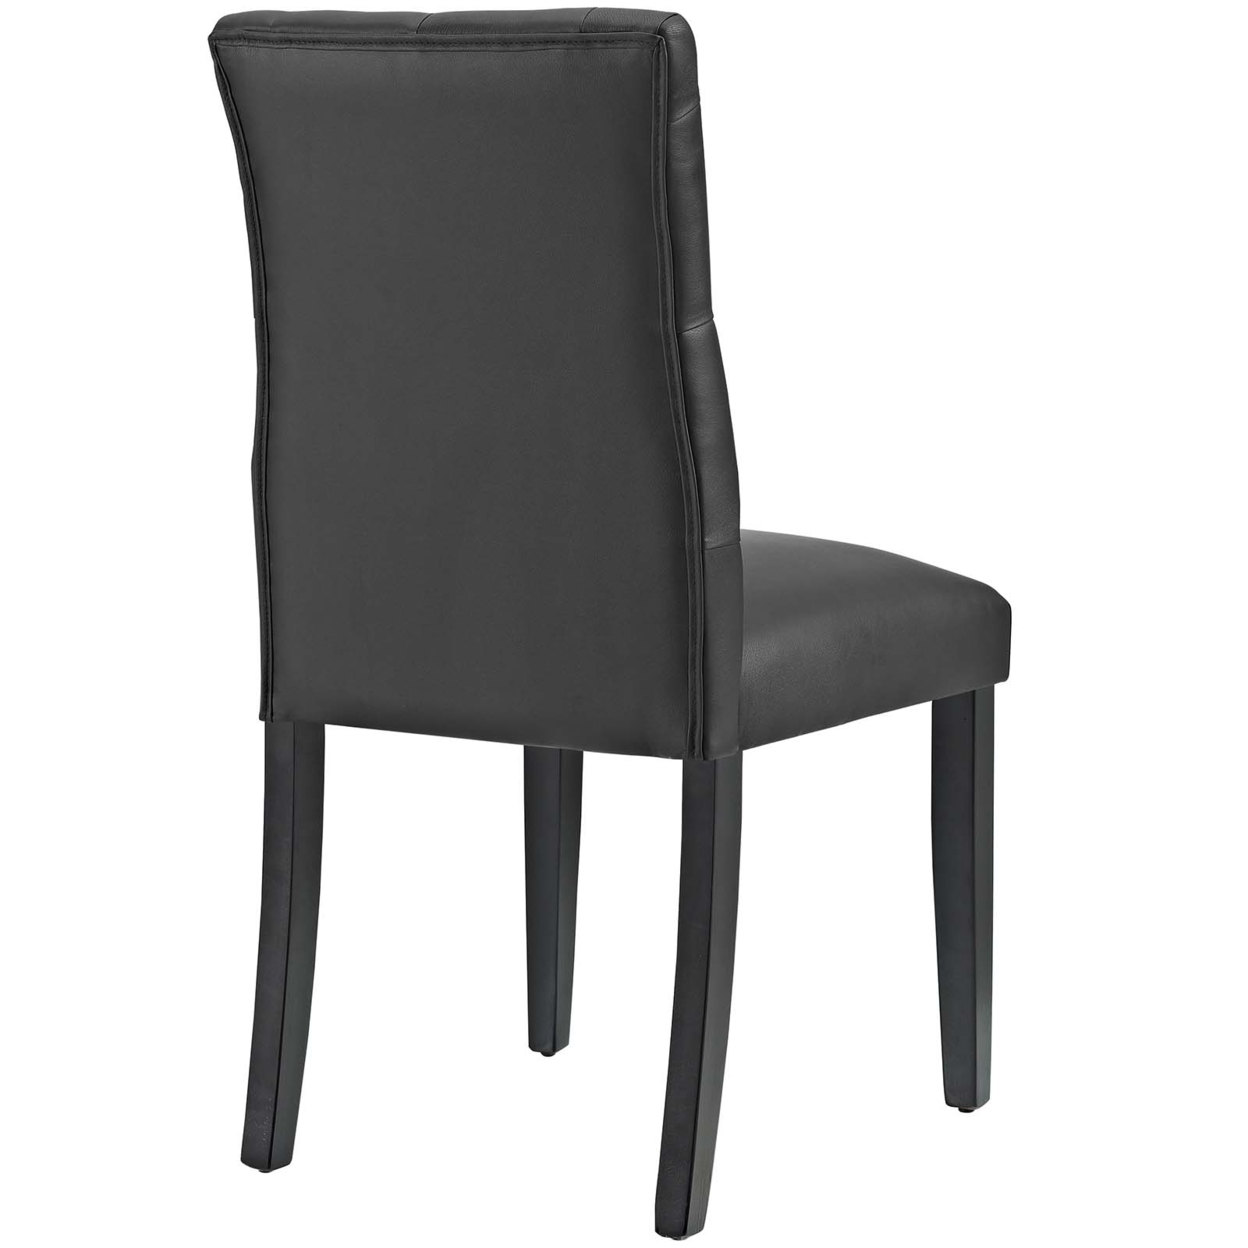 Duchess Vinyl Dining Chair, Black